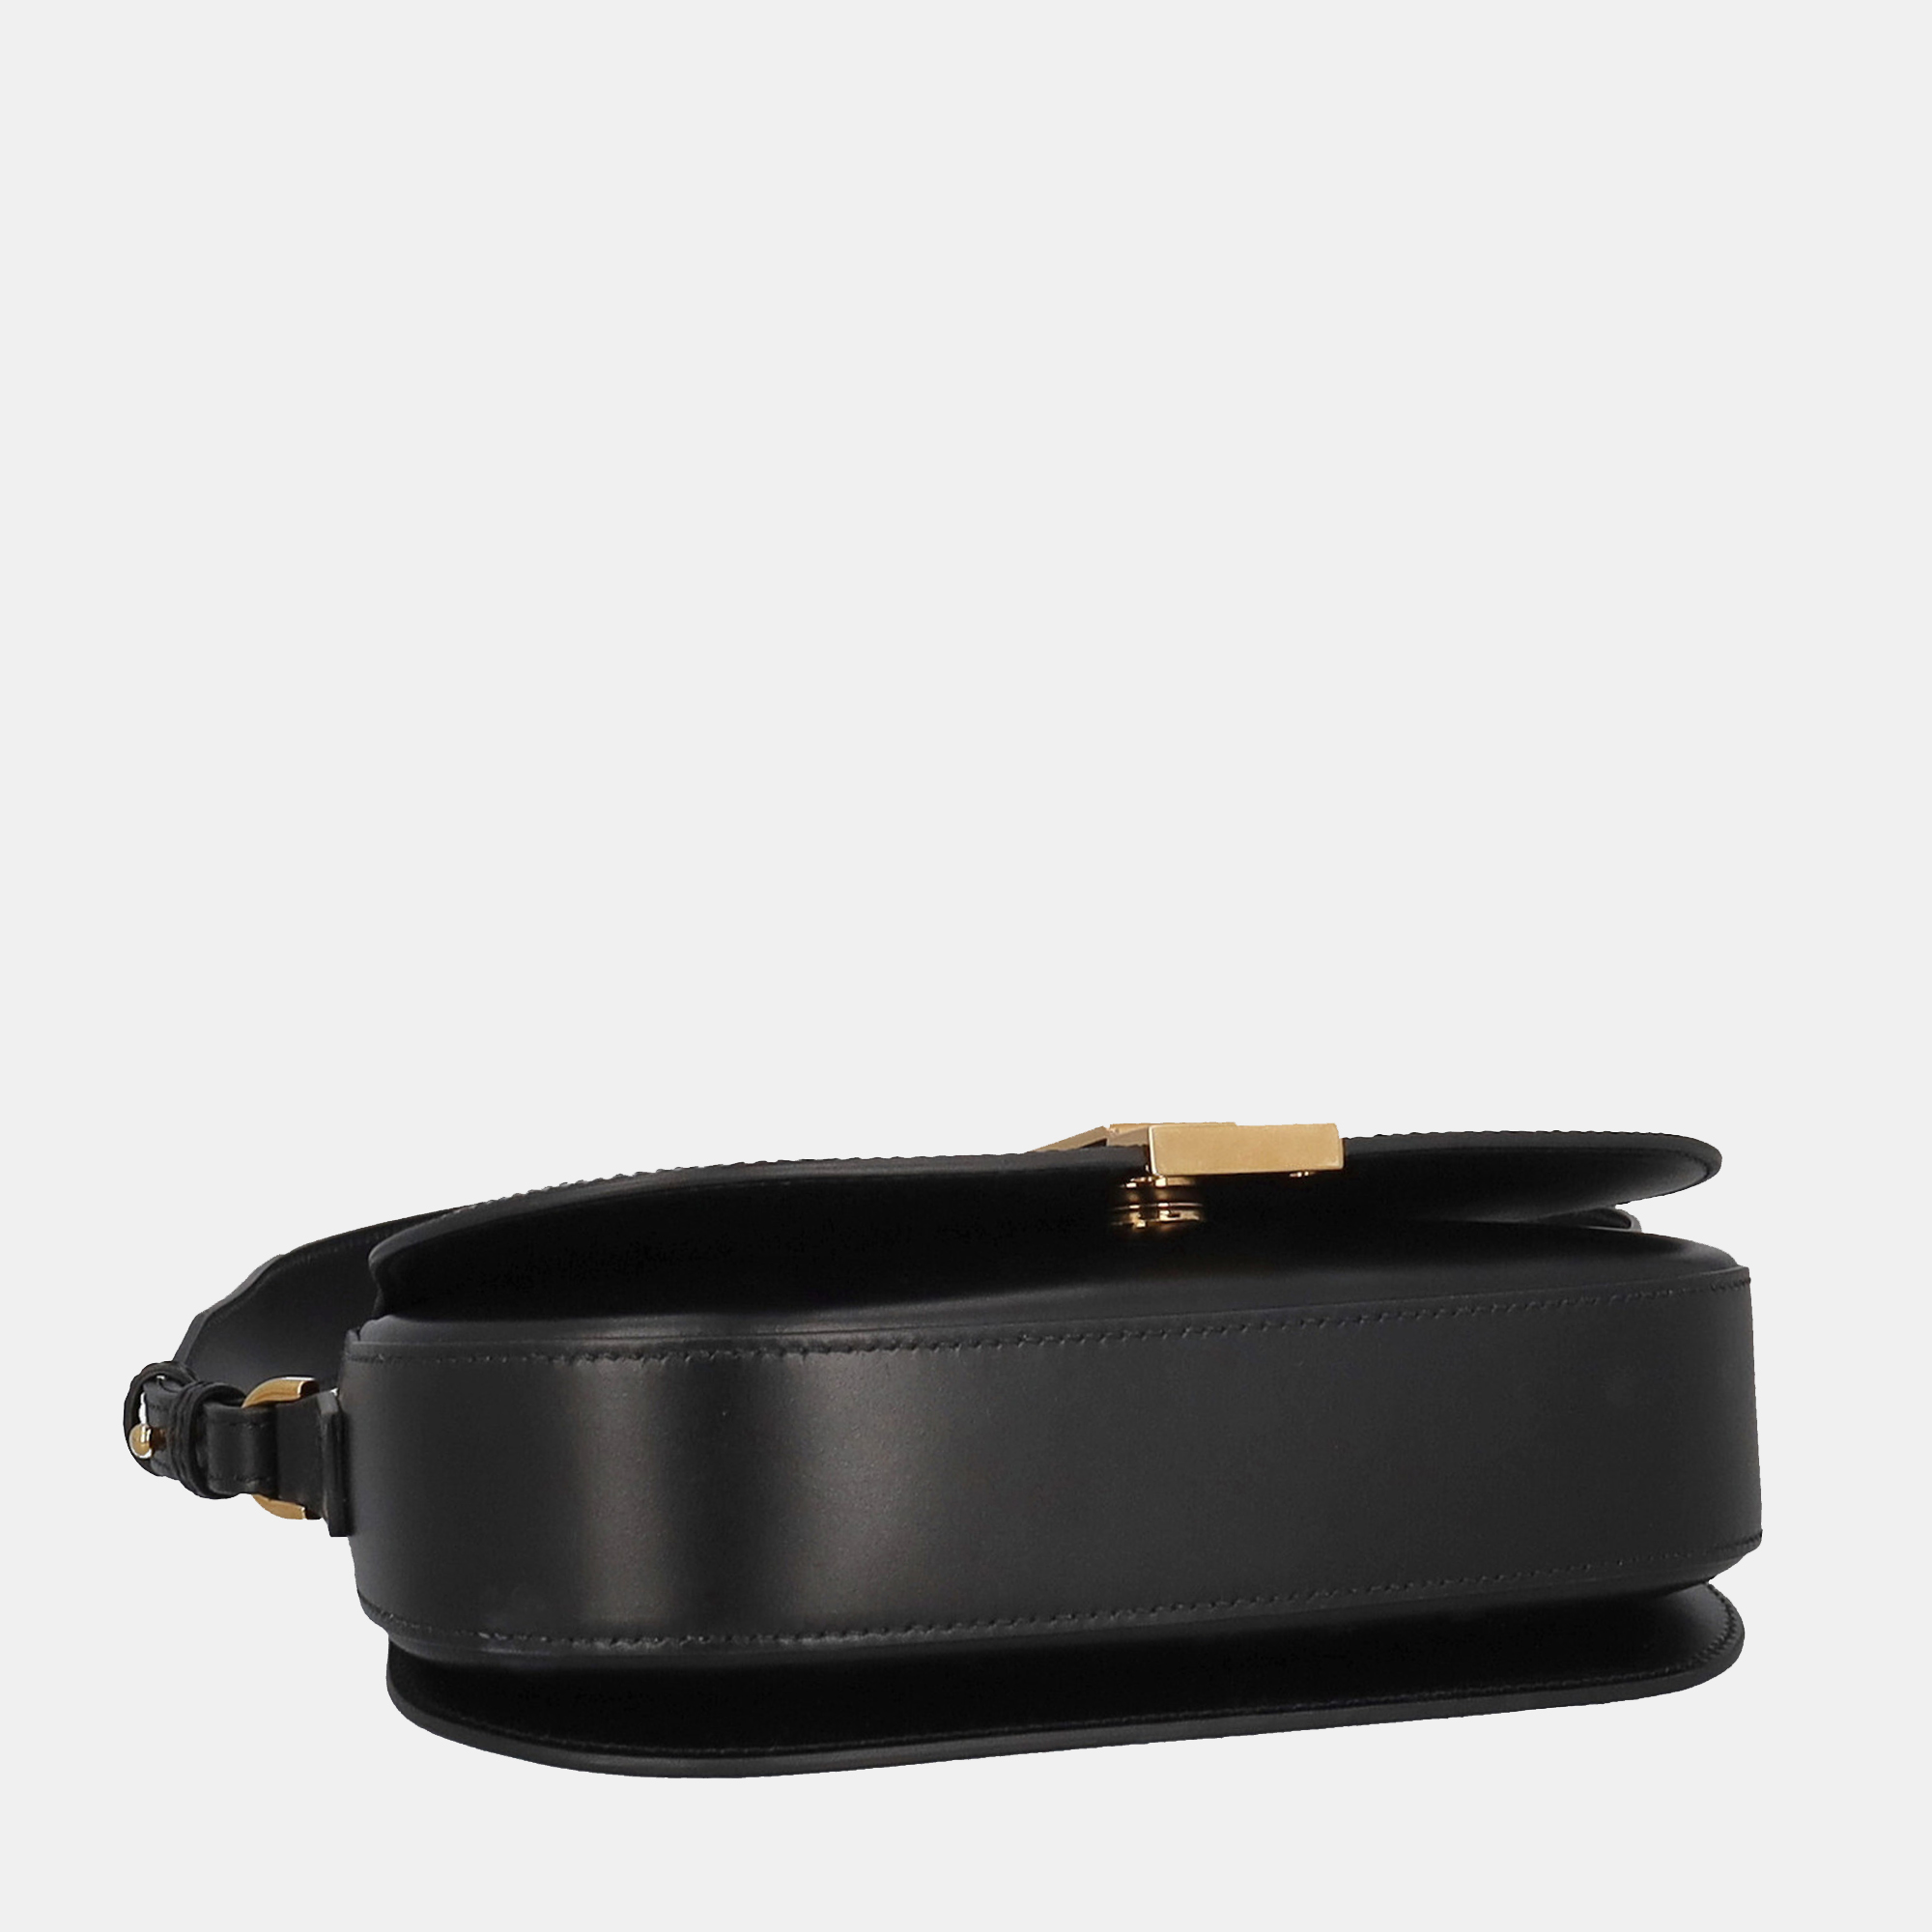 Versace  Women's Leather Cross Body Bag - Black - One Size